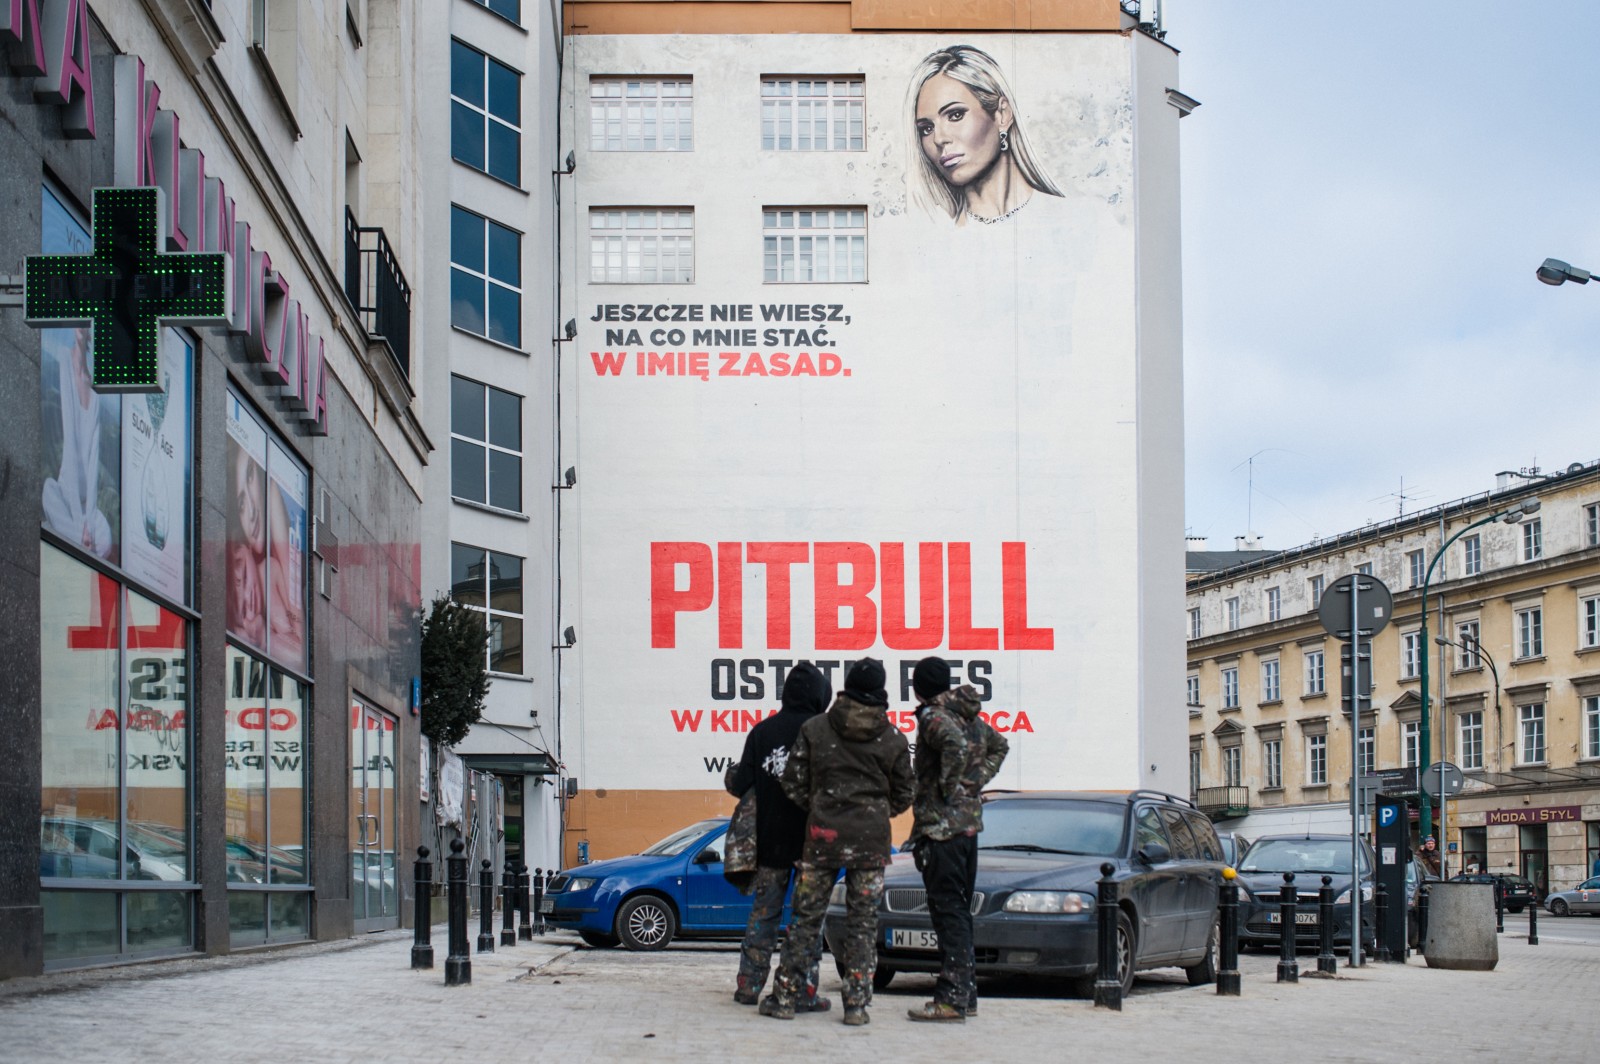 1. painting works on the creation of a muralPainting works on the mural Pitbull for Ent One | Pitbull. Ostatni pies | Portfolio